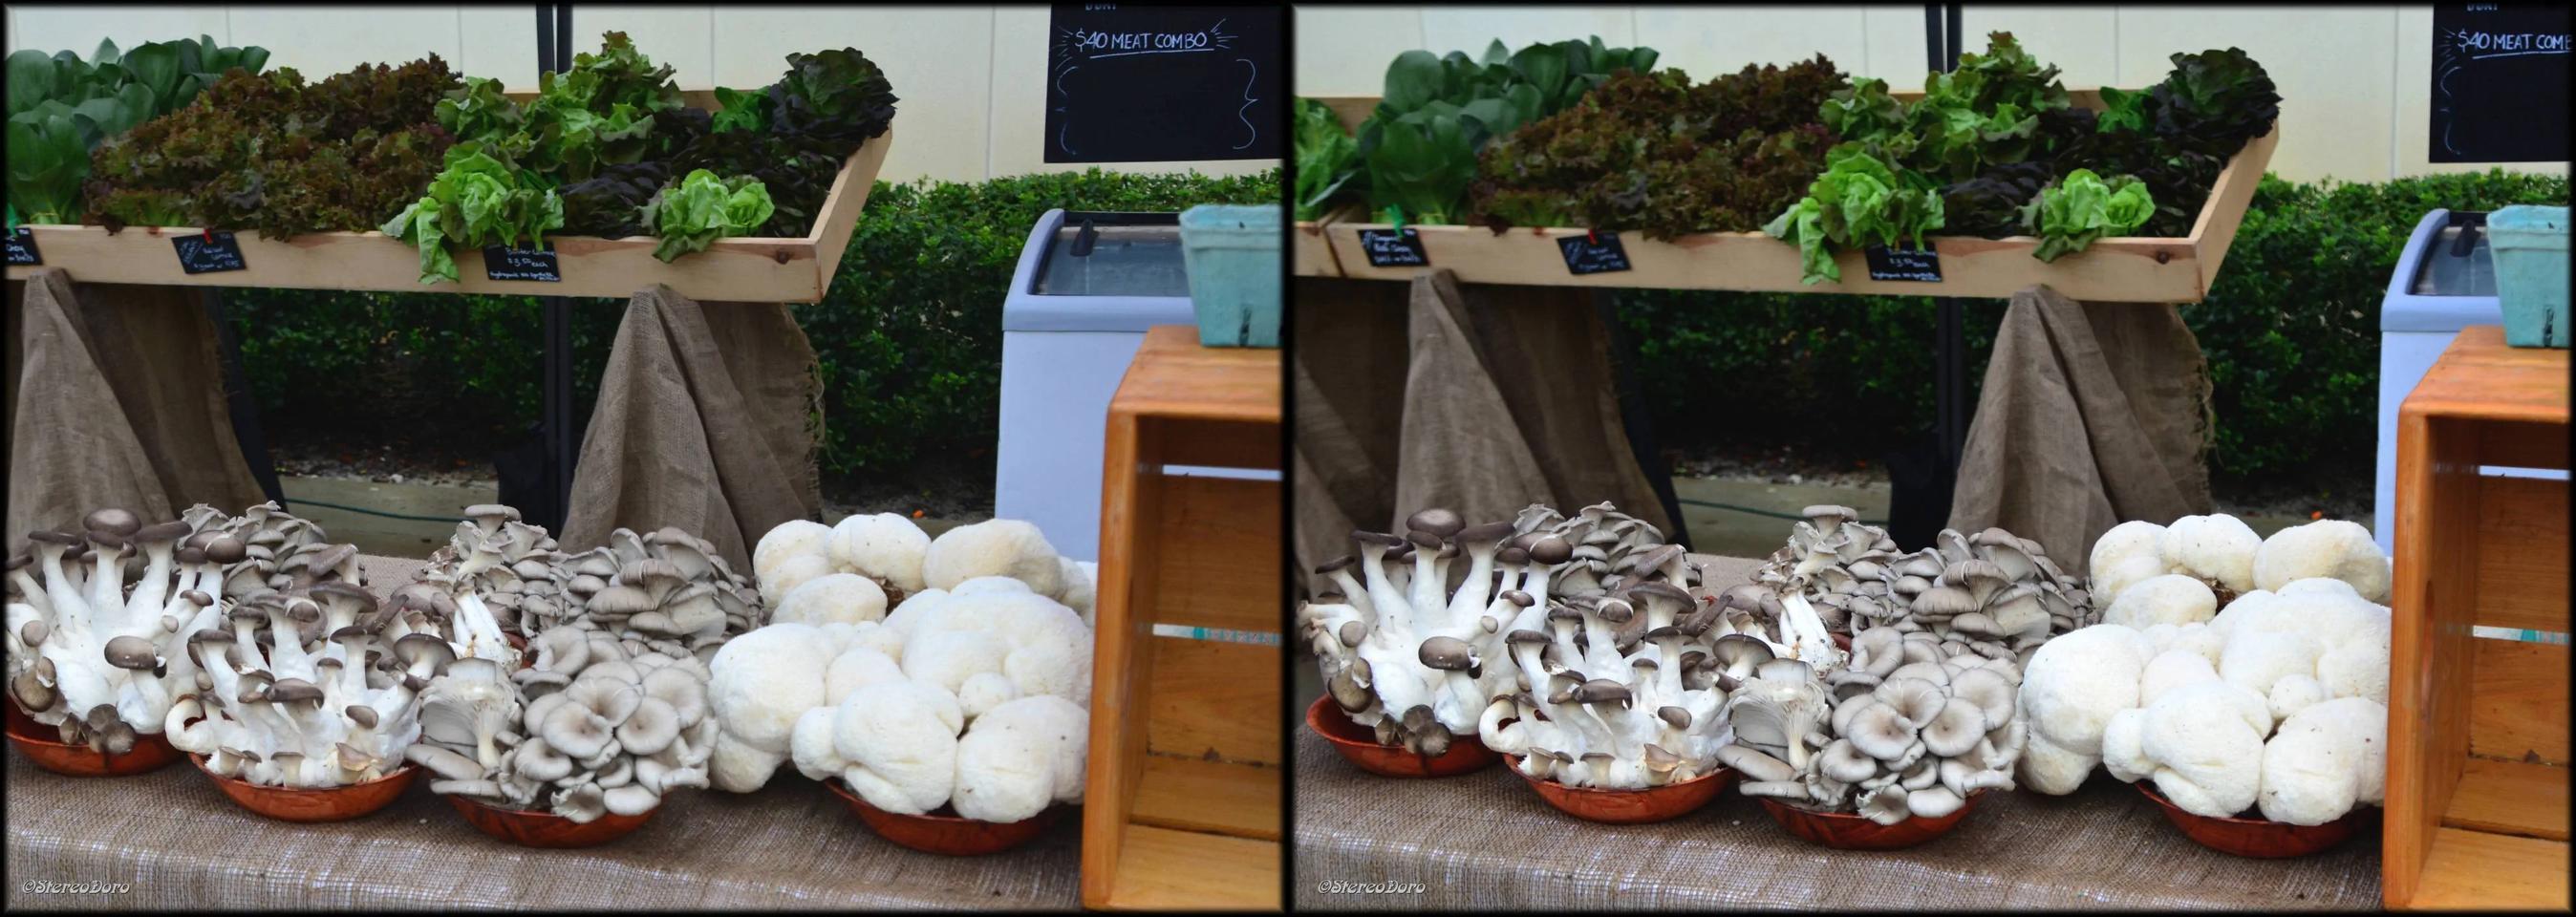 Mushrooms at the Market